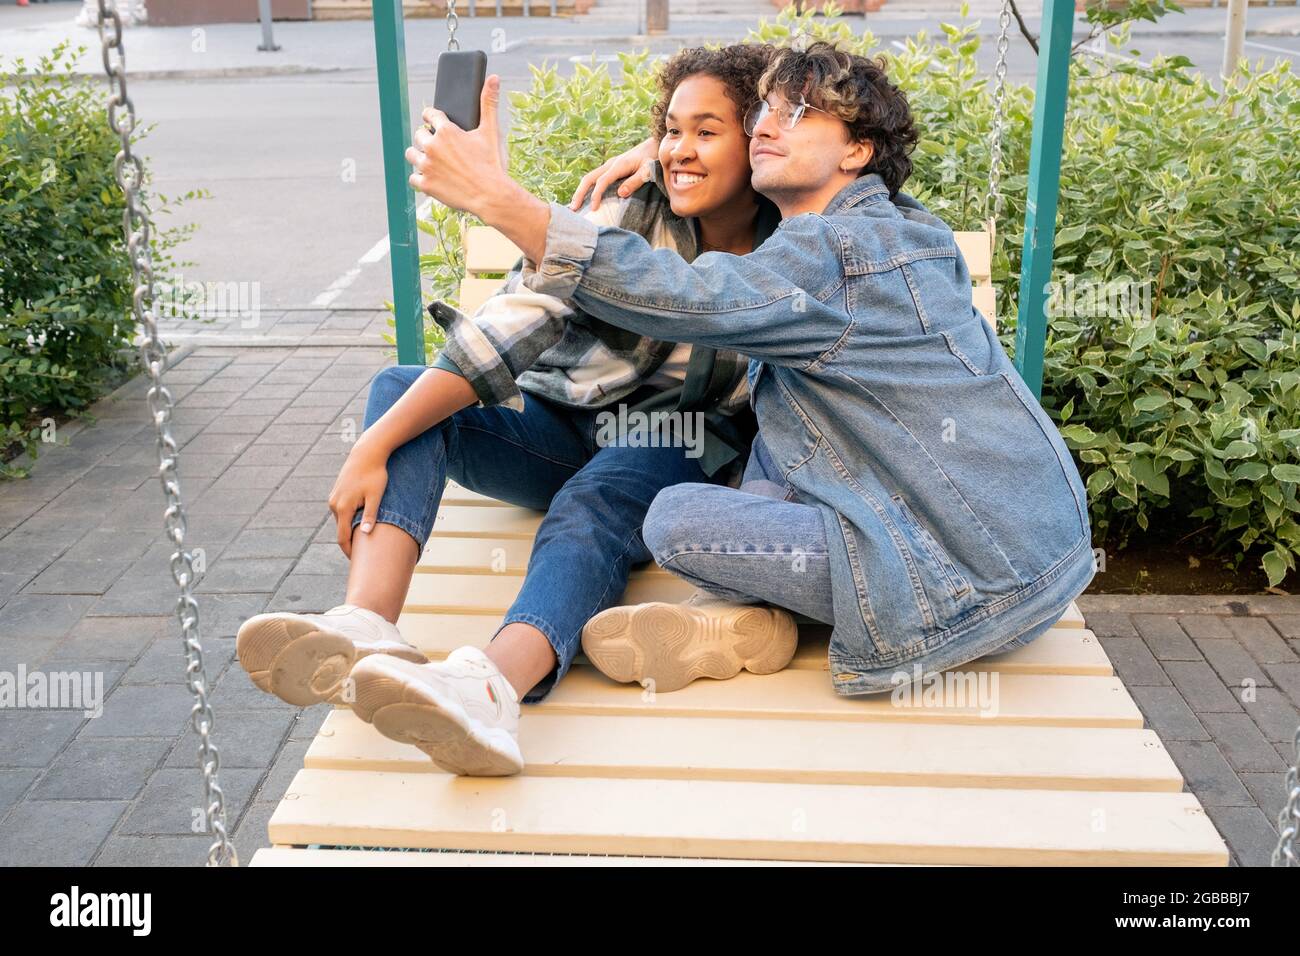 Carefree teenage dates making selfie on swings while guy embracing his happy girlfriend Stock Photo